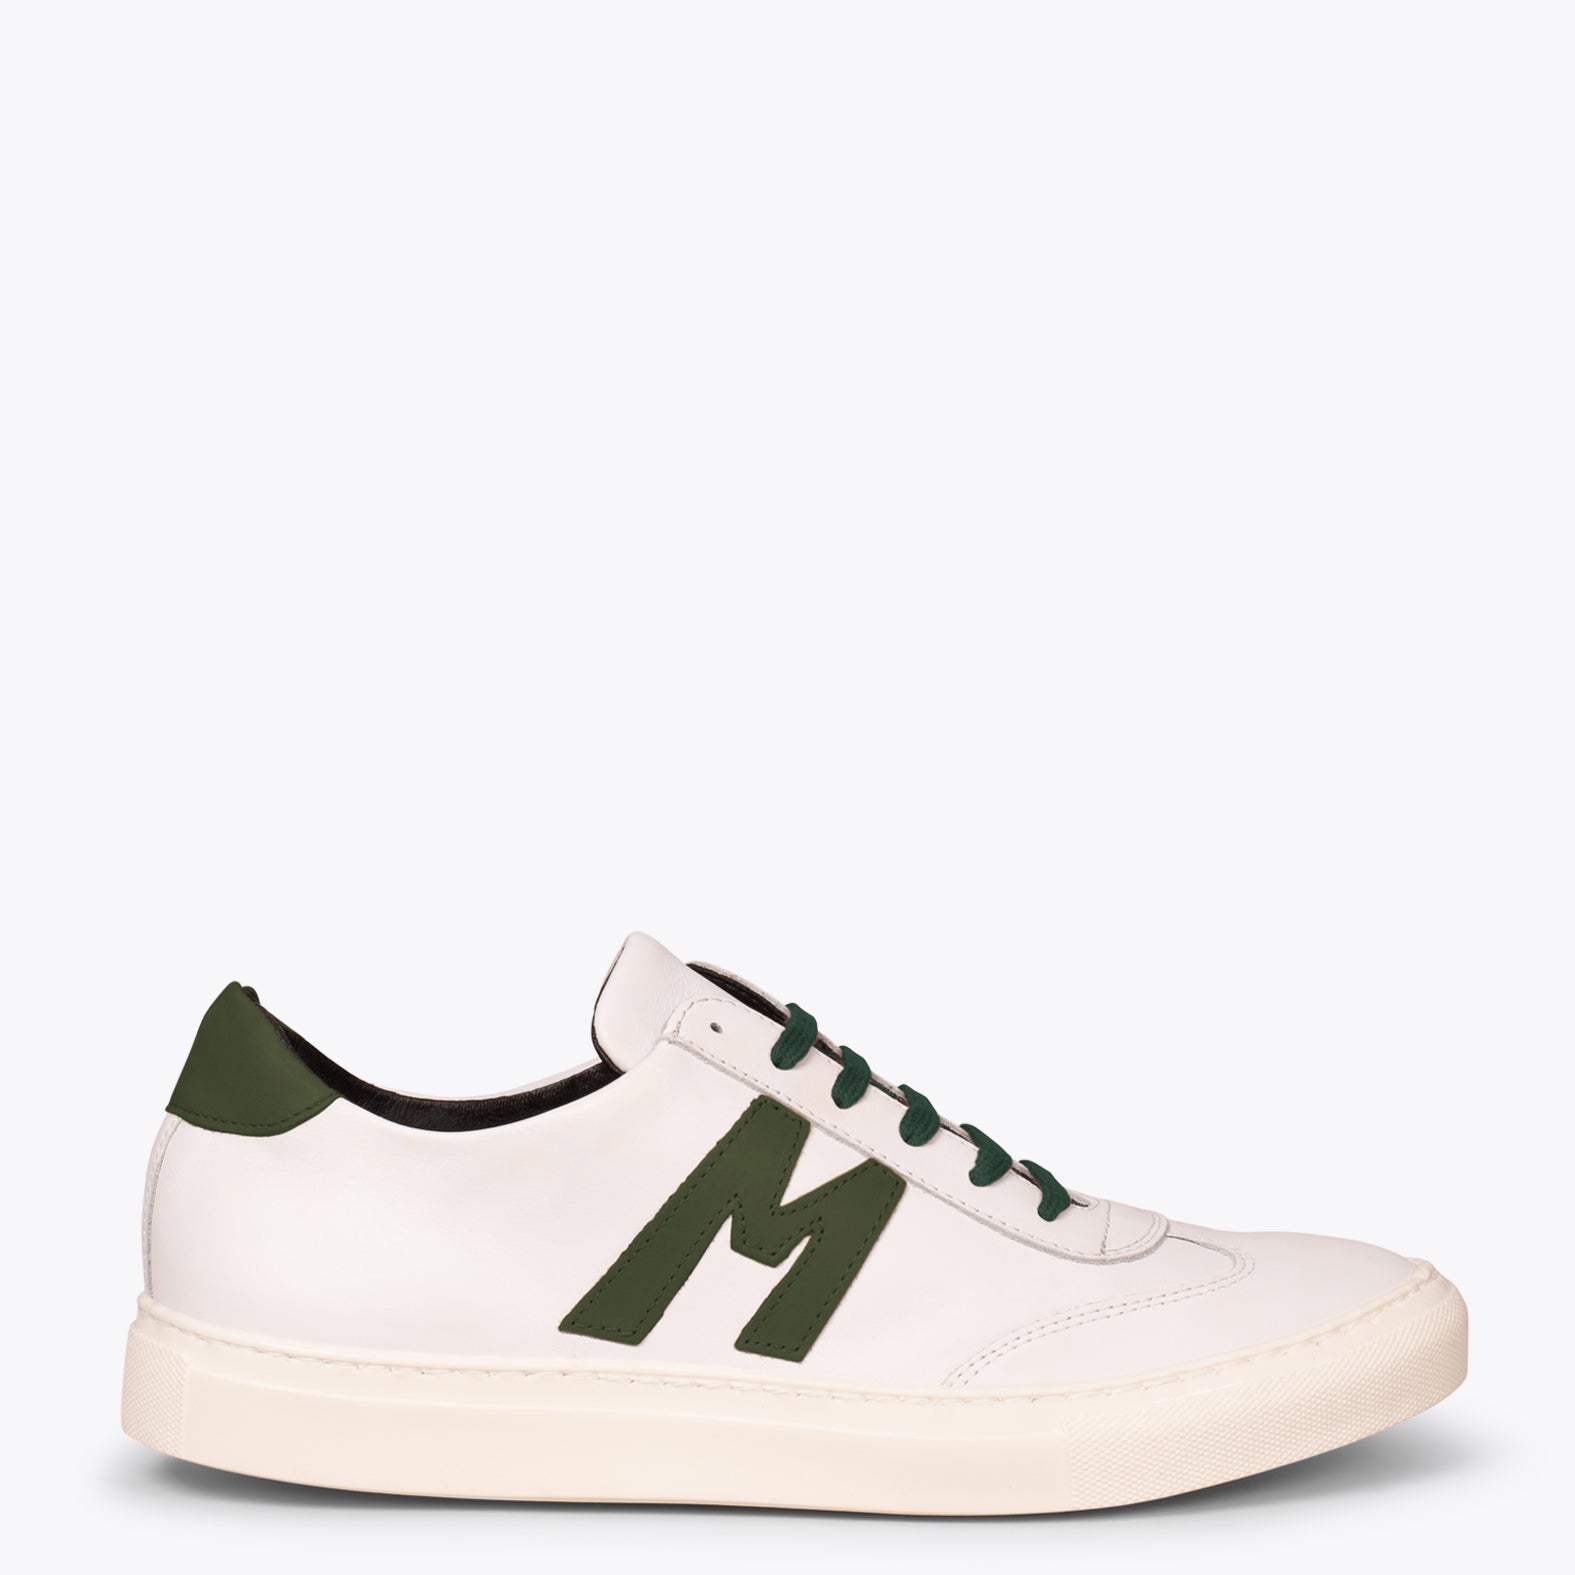 MONACO – GREEN casual sneaker for men